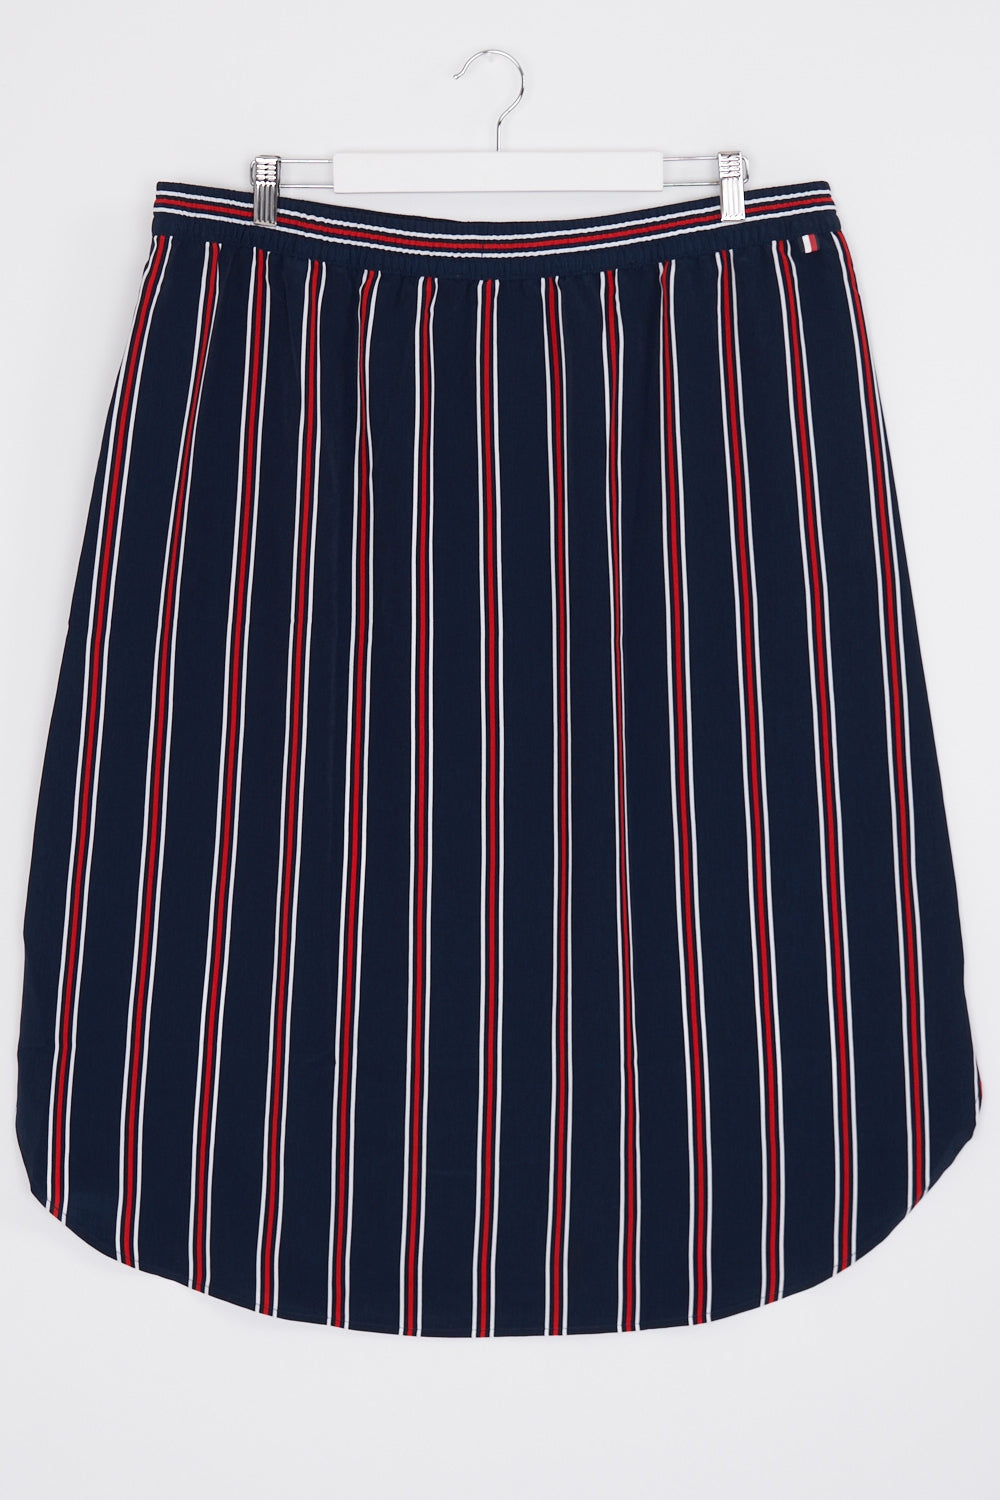 Tommy Hilfiger Navy Striped Skirt XXL